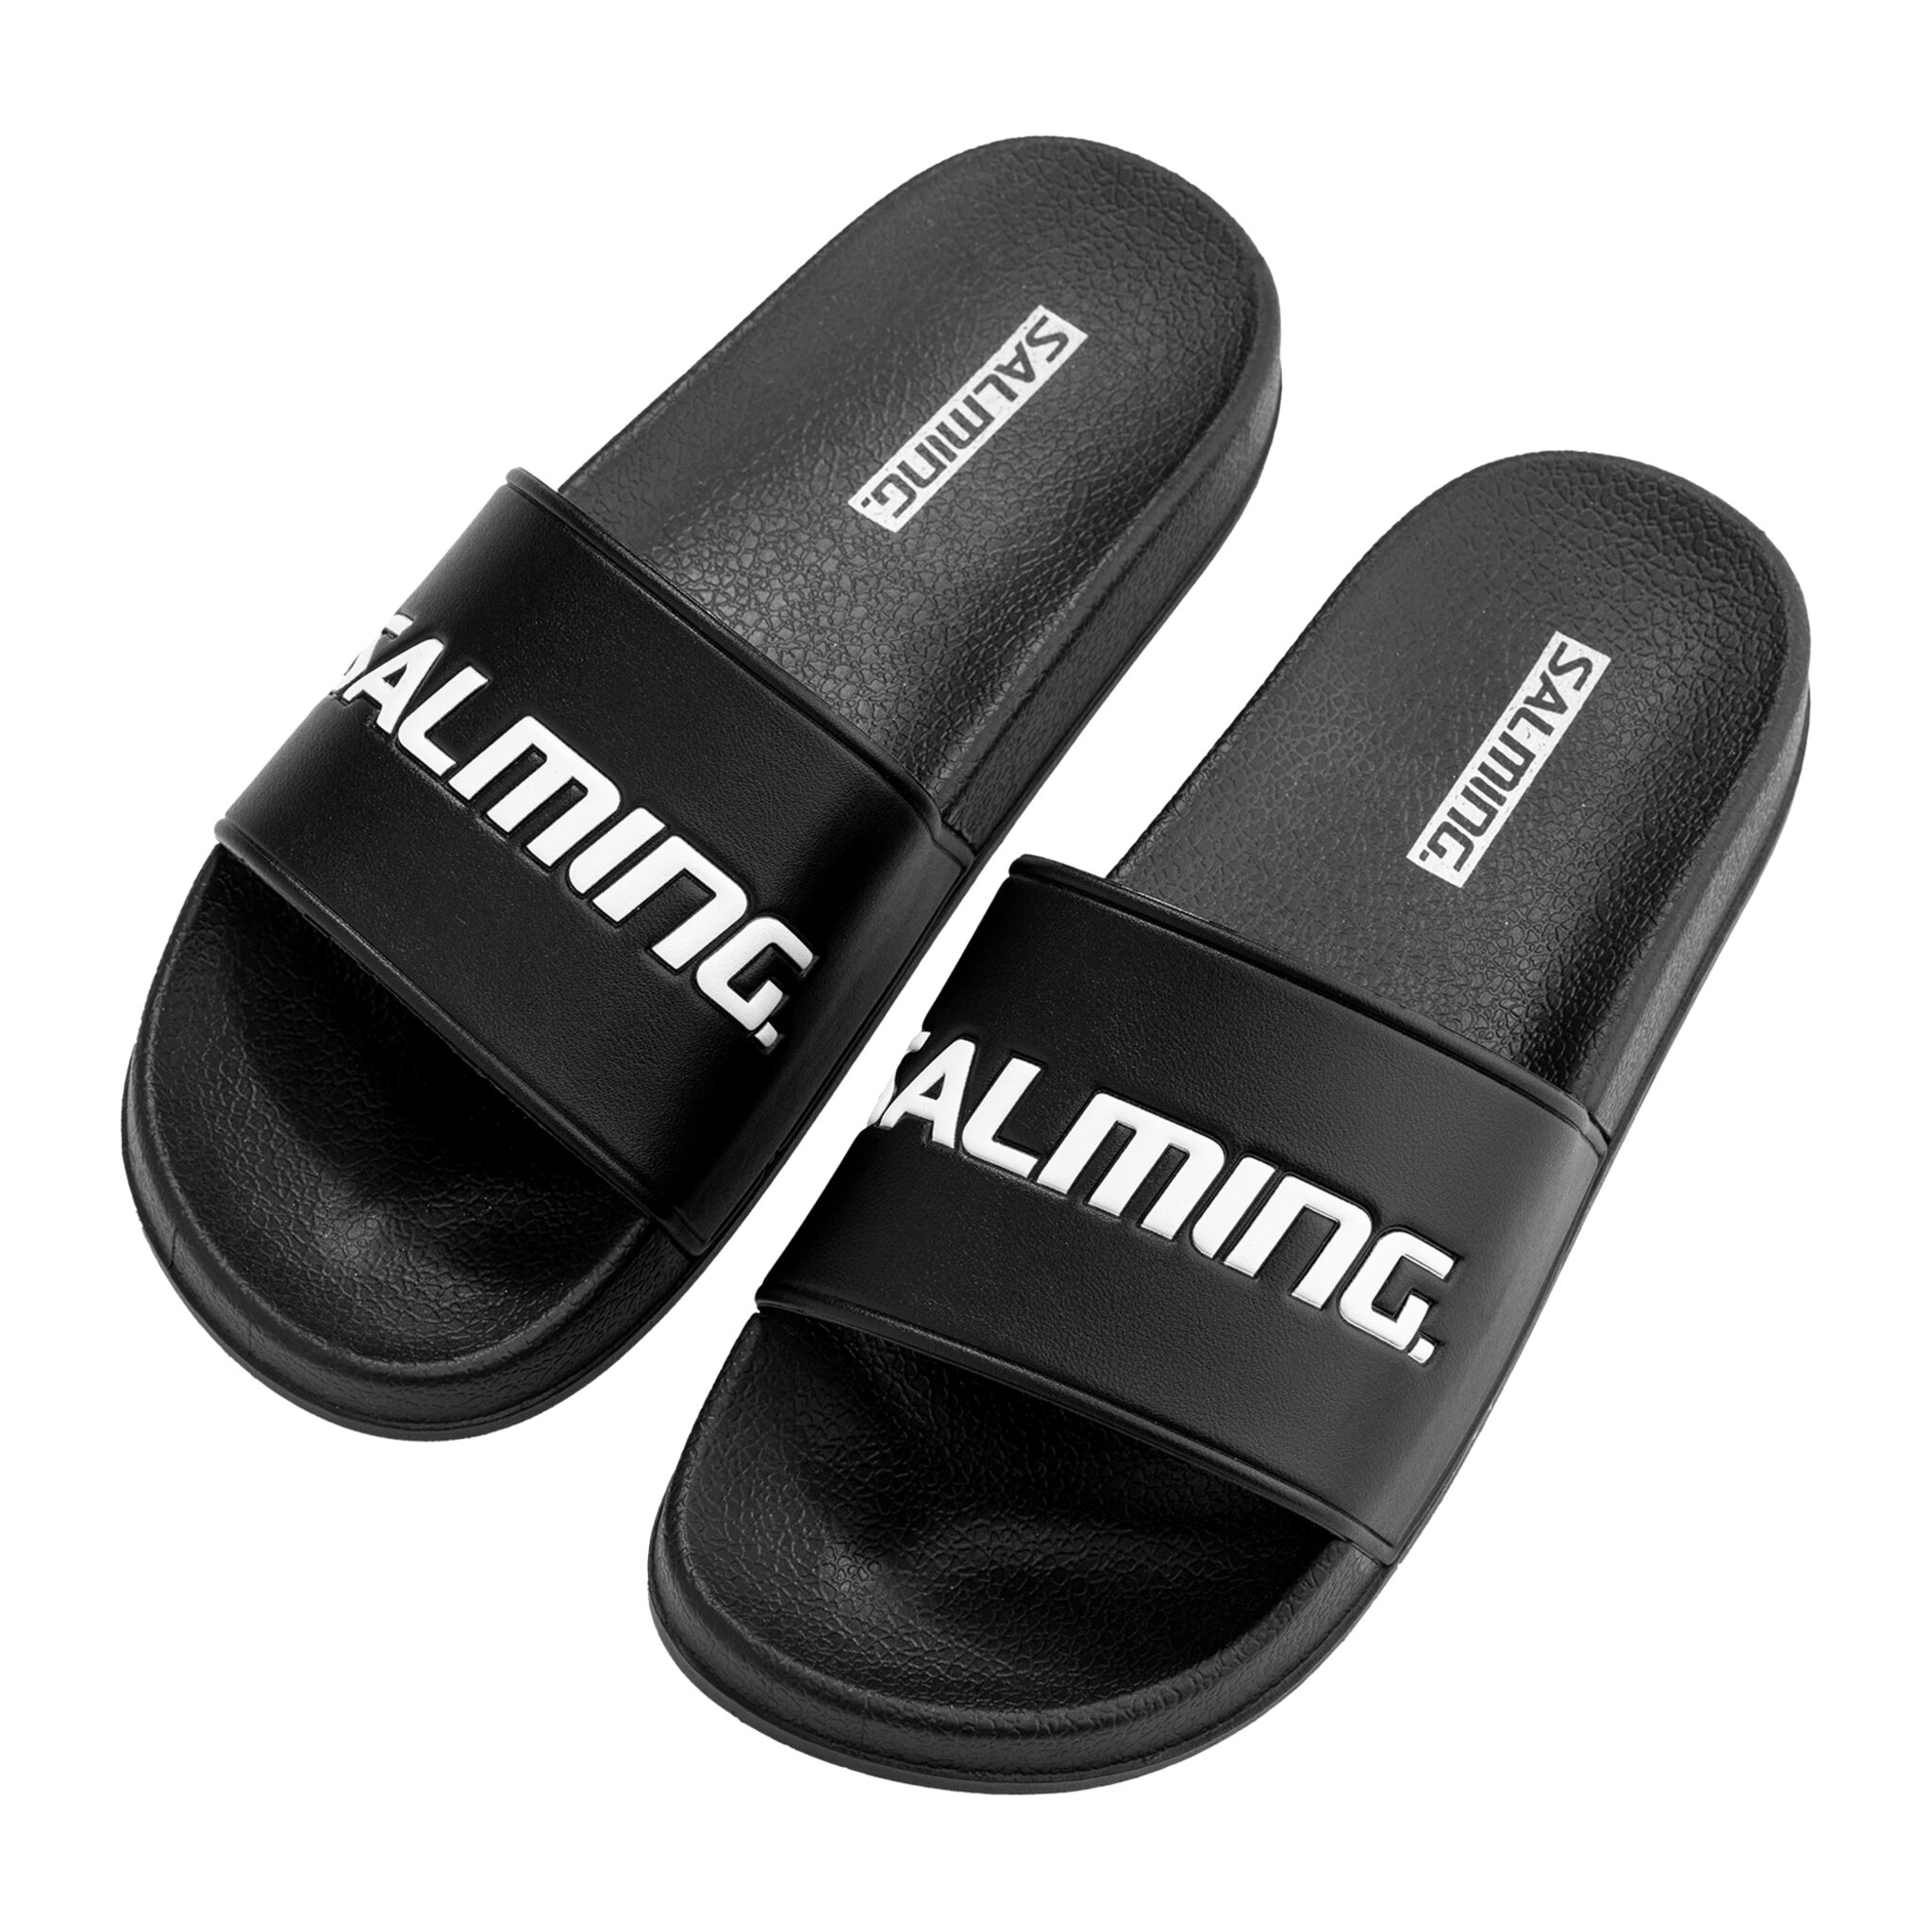 Salming Comfort Shower Sandal JR/SR-21/22, slippers 32/33 BLACK